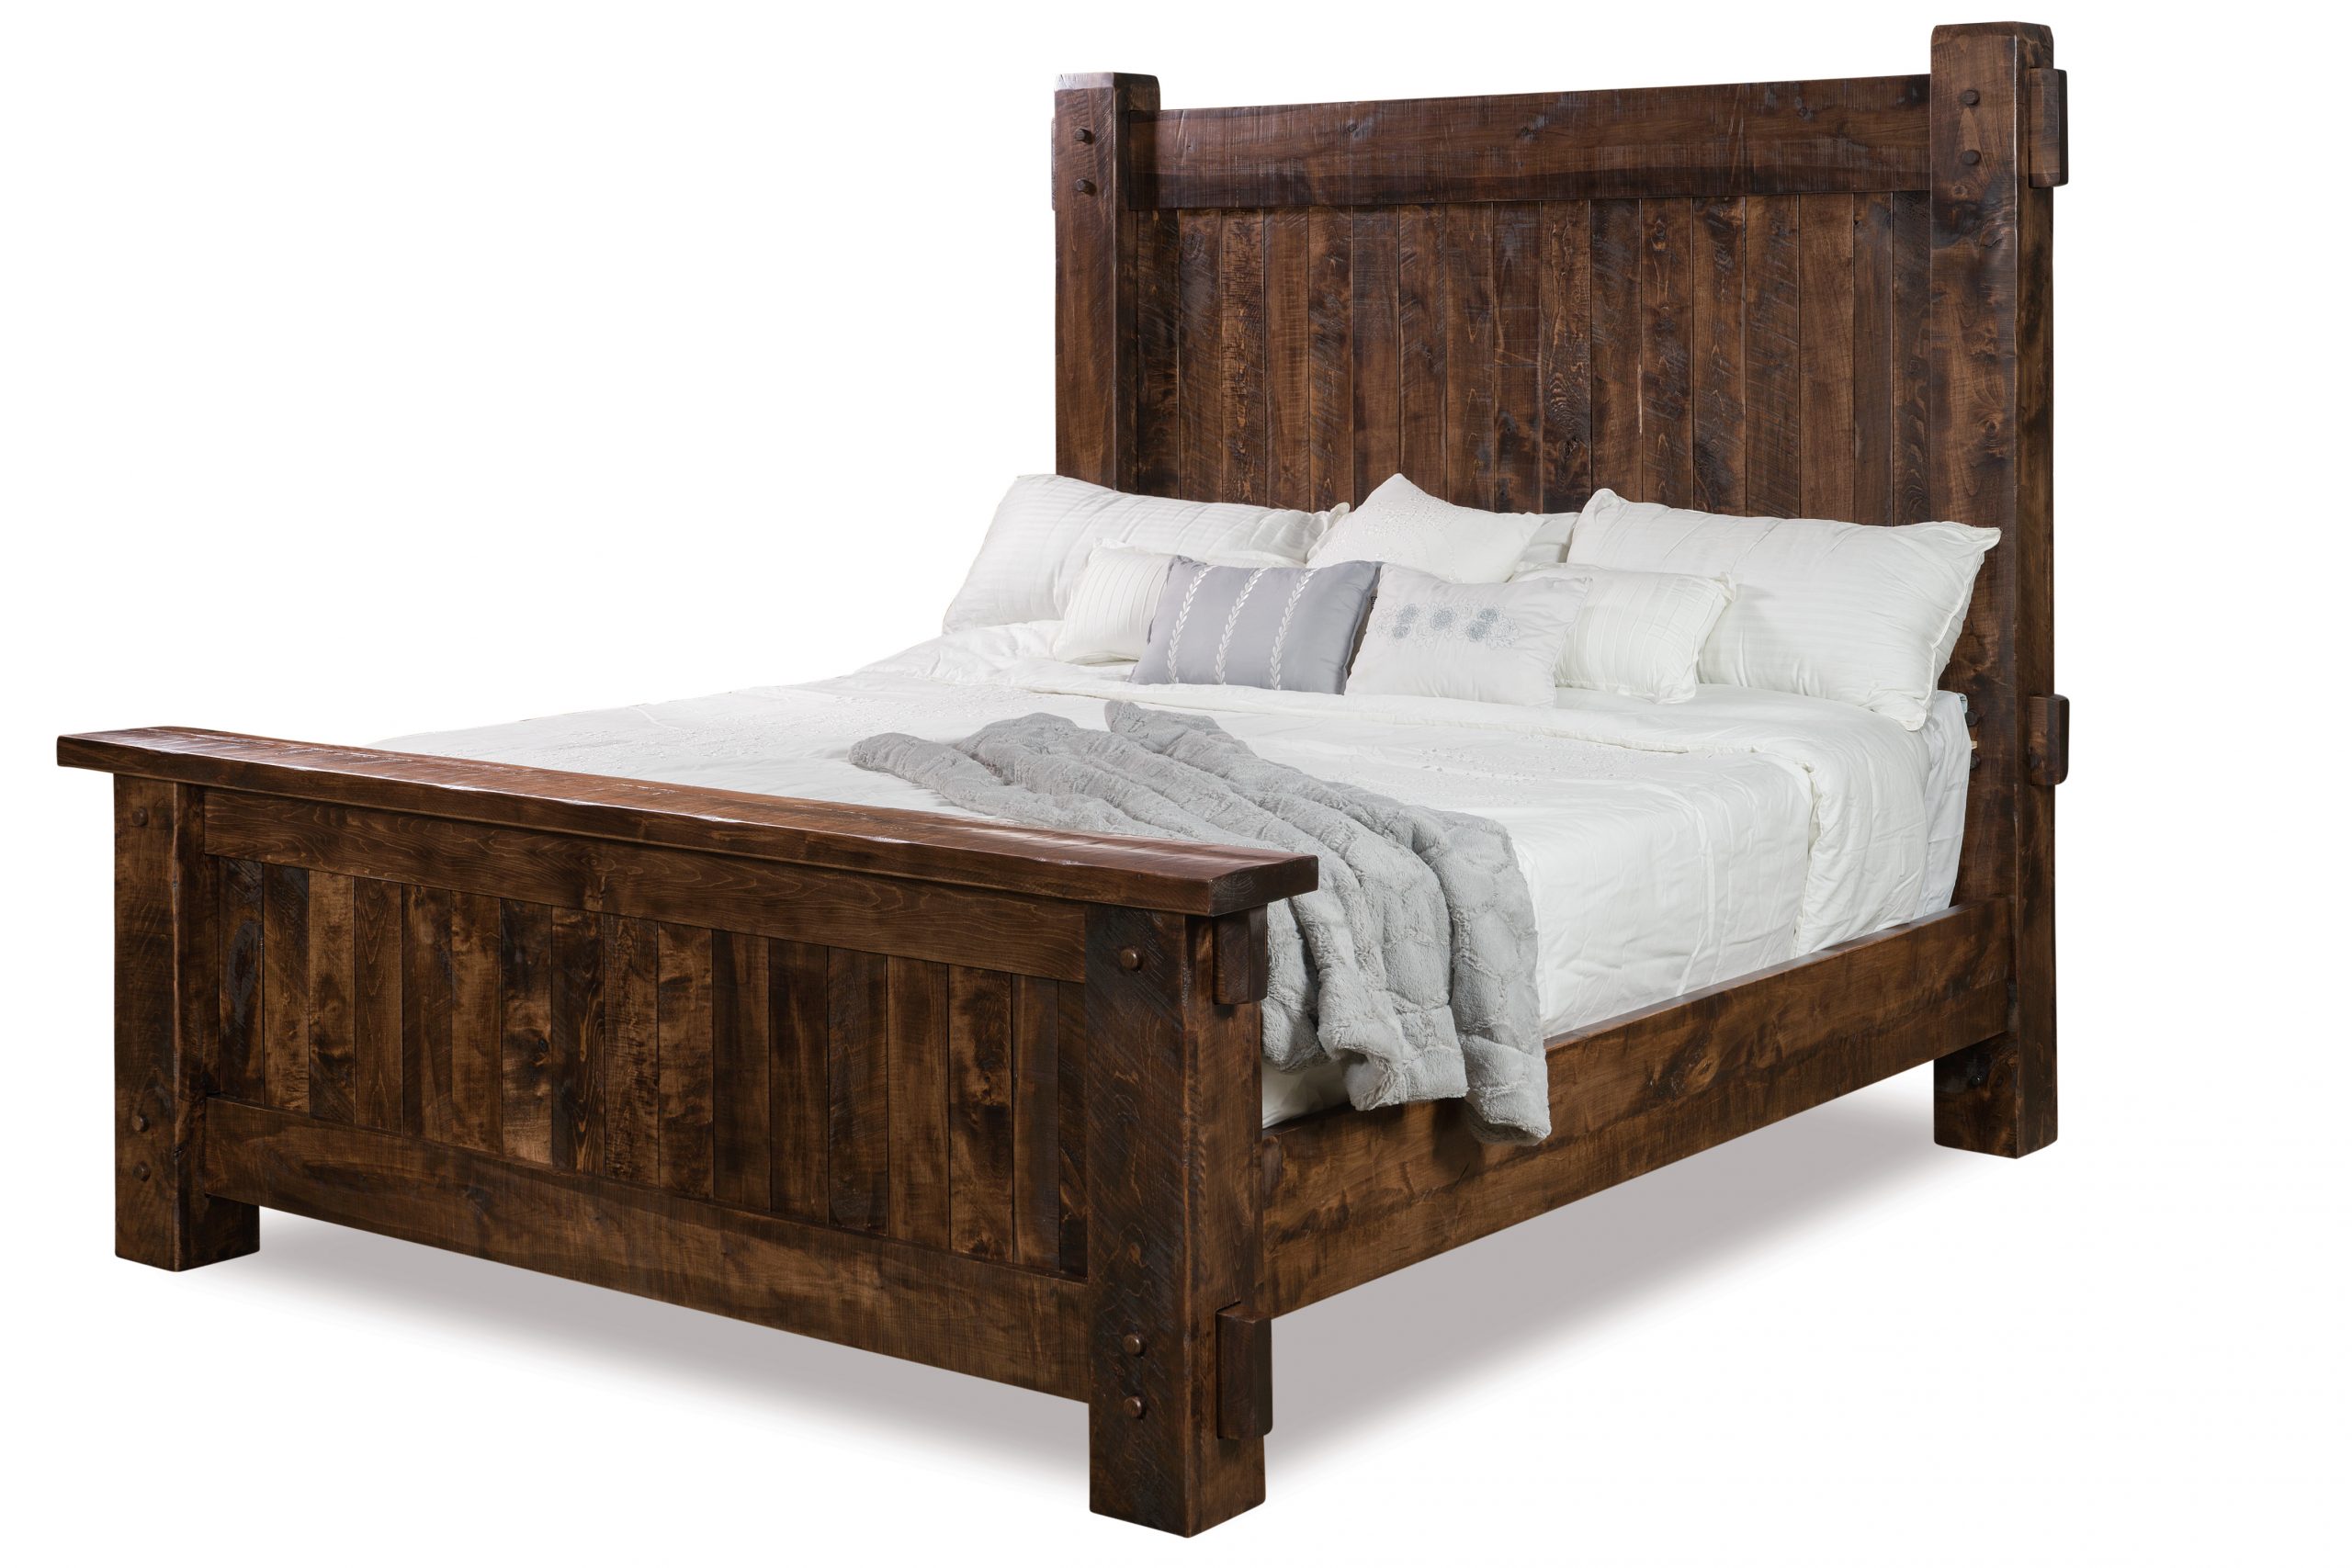 Grandon Bed Amish Solid Wood Beds, Amish Bed Frames